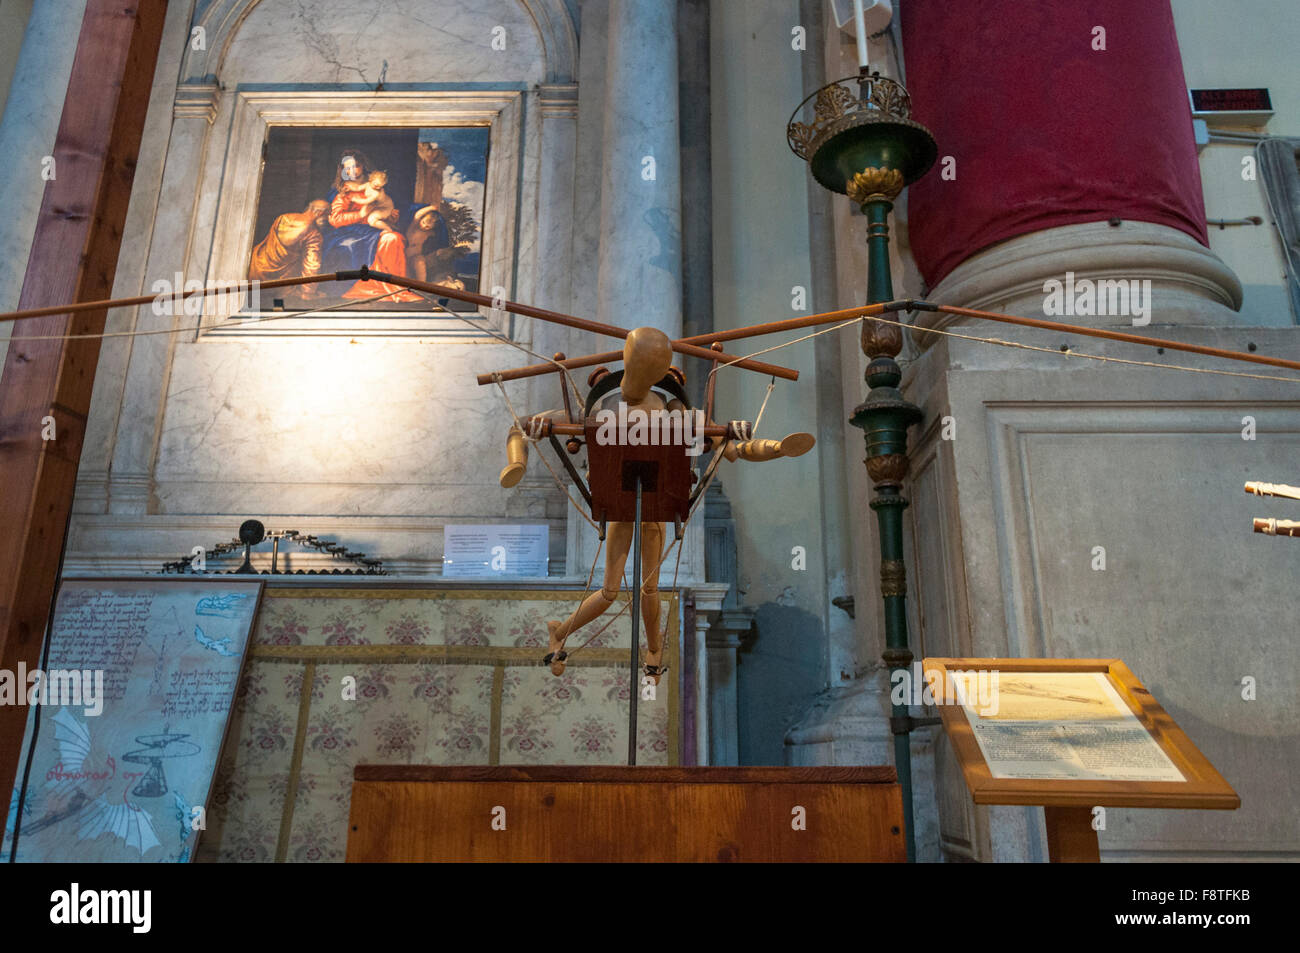 Exhibition of Da Vinci machines, flying machines shown here, Venice, Italy Stock Photo